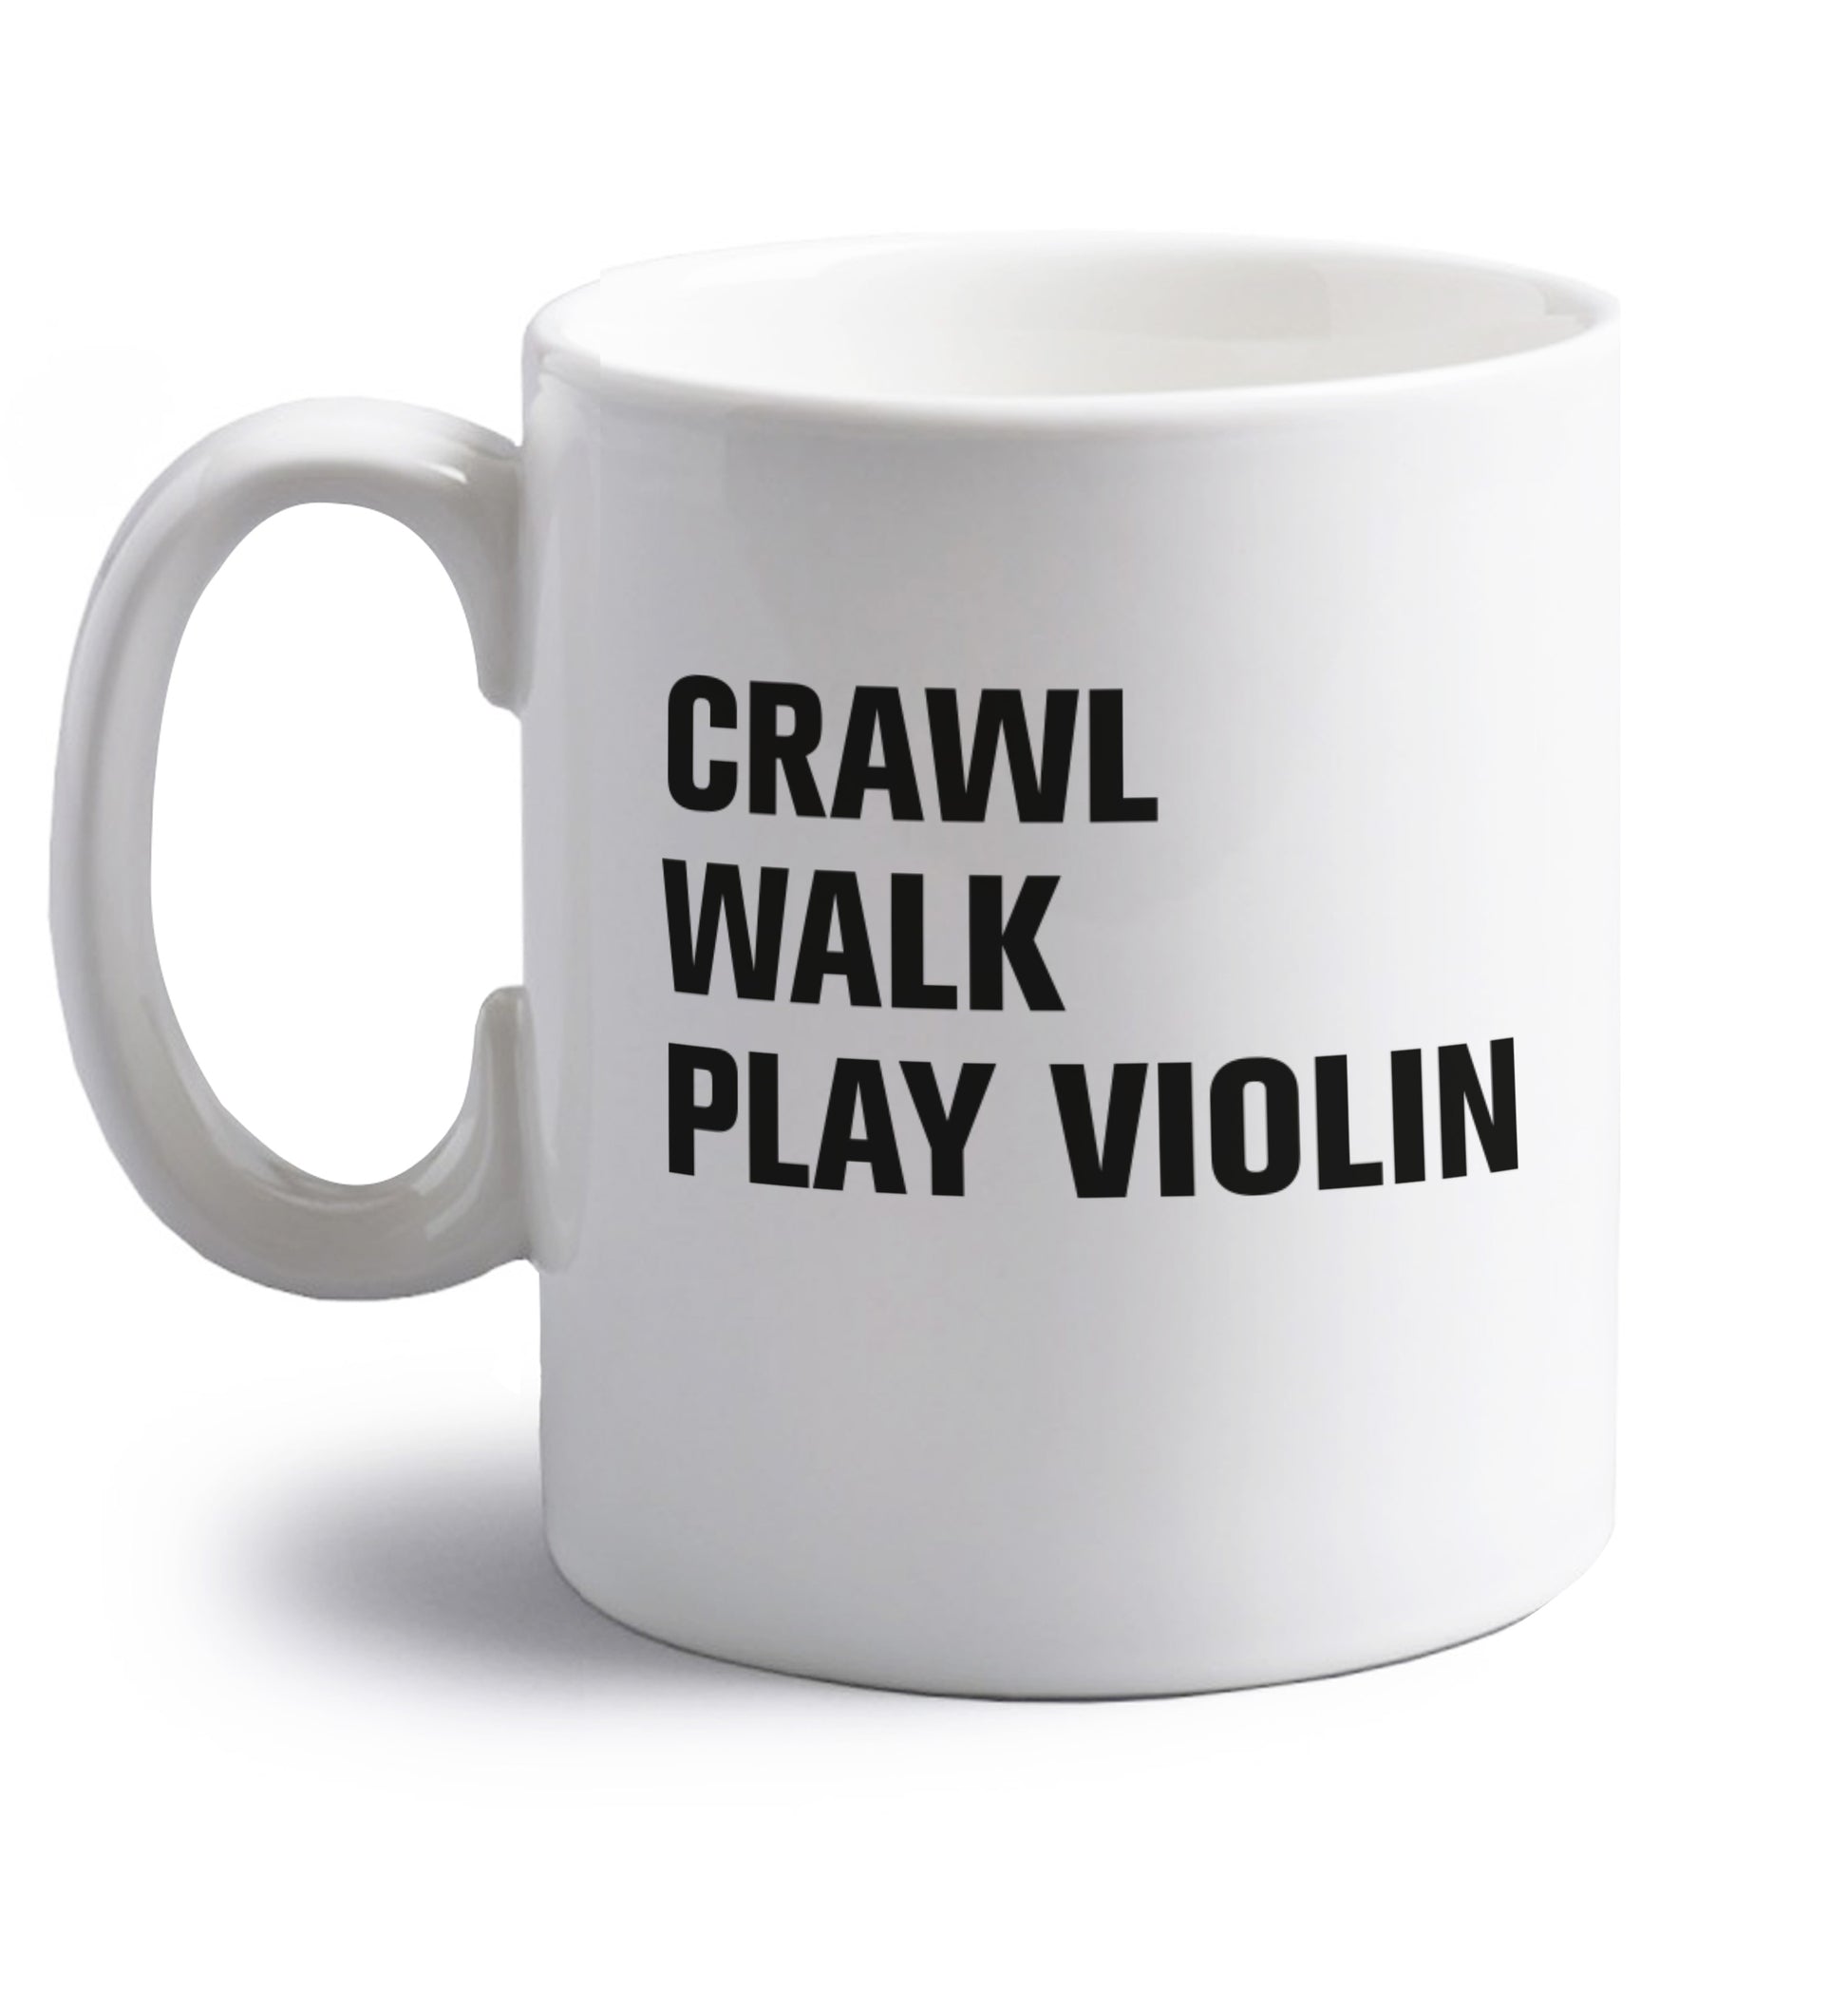 Crawl Walk Play Violin right handed white ceramic mug 